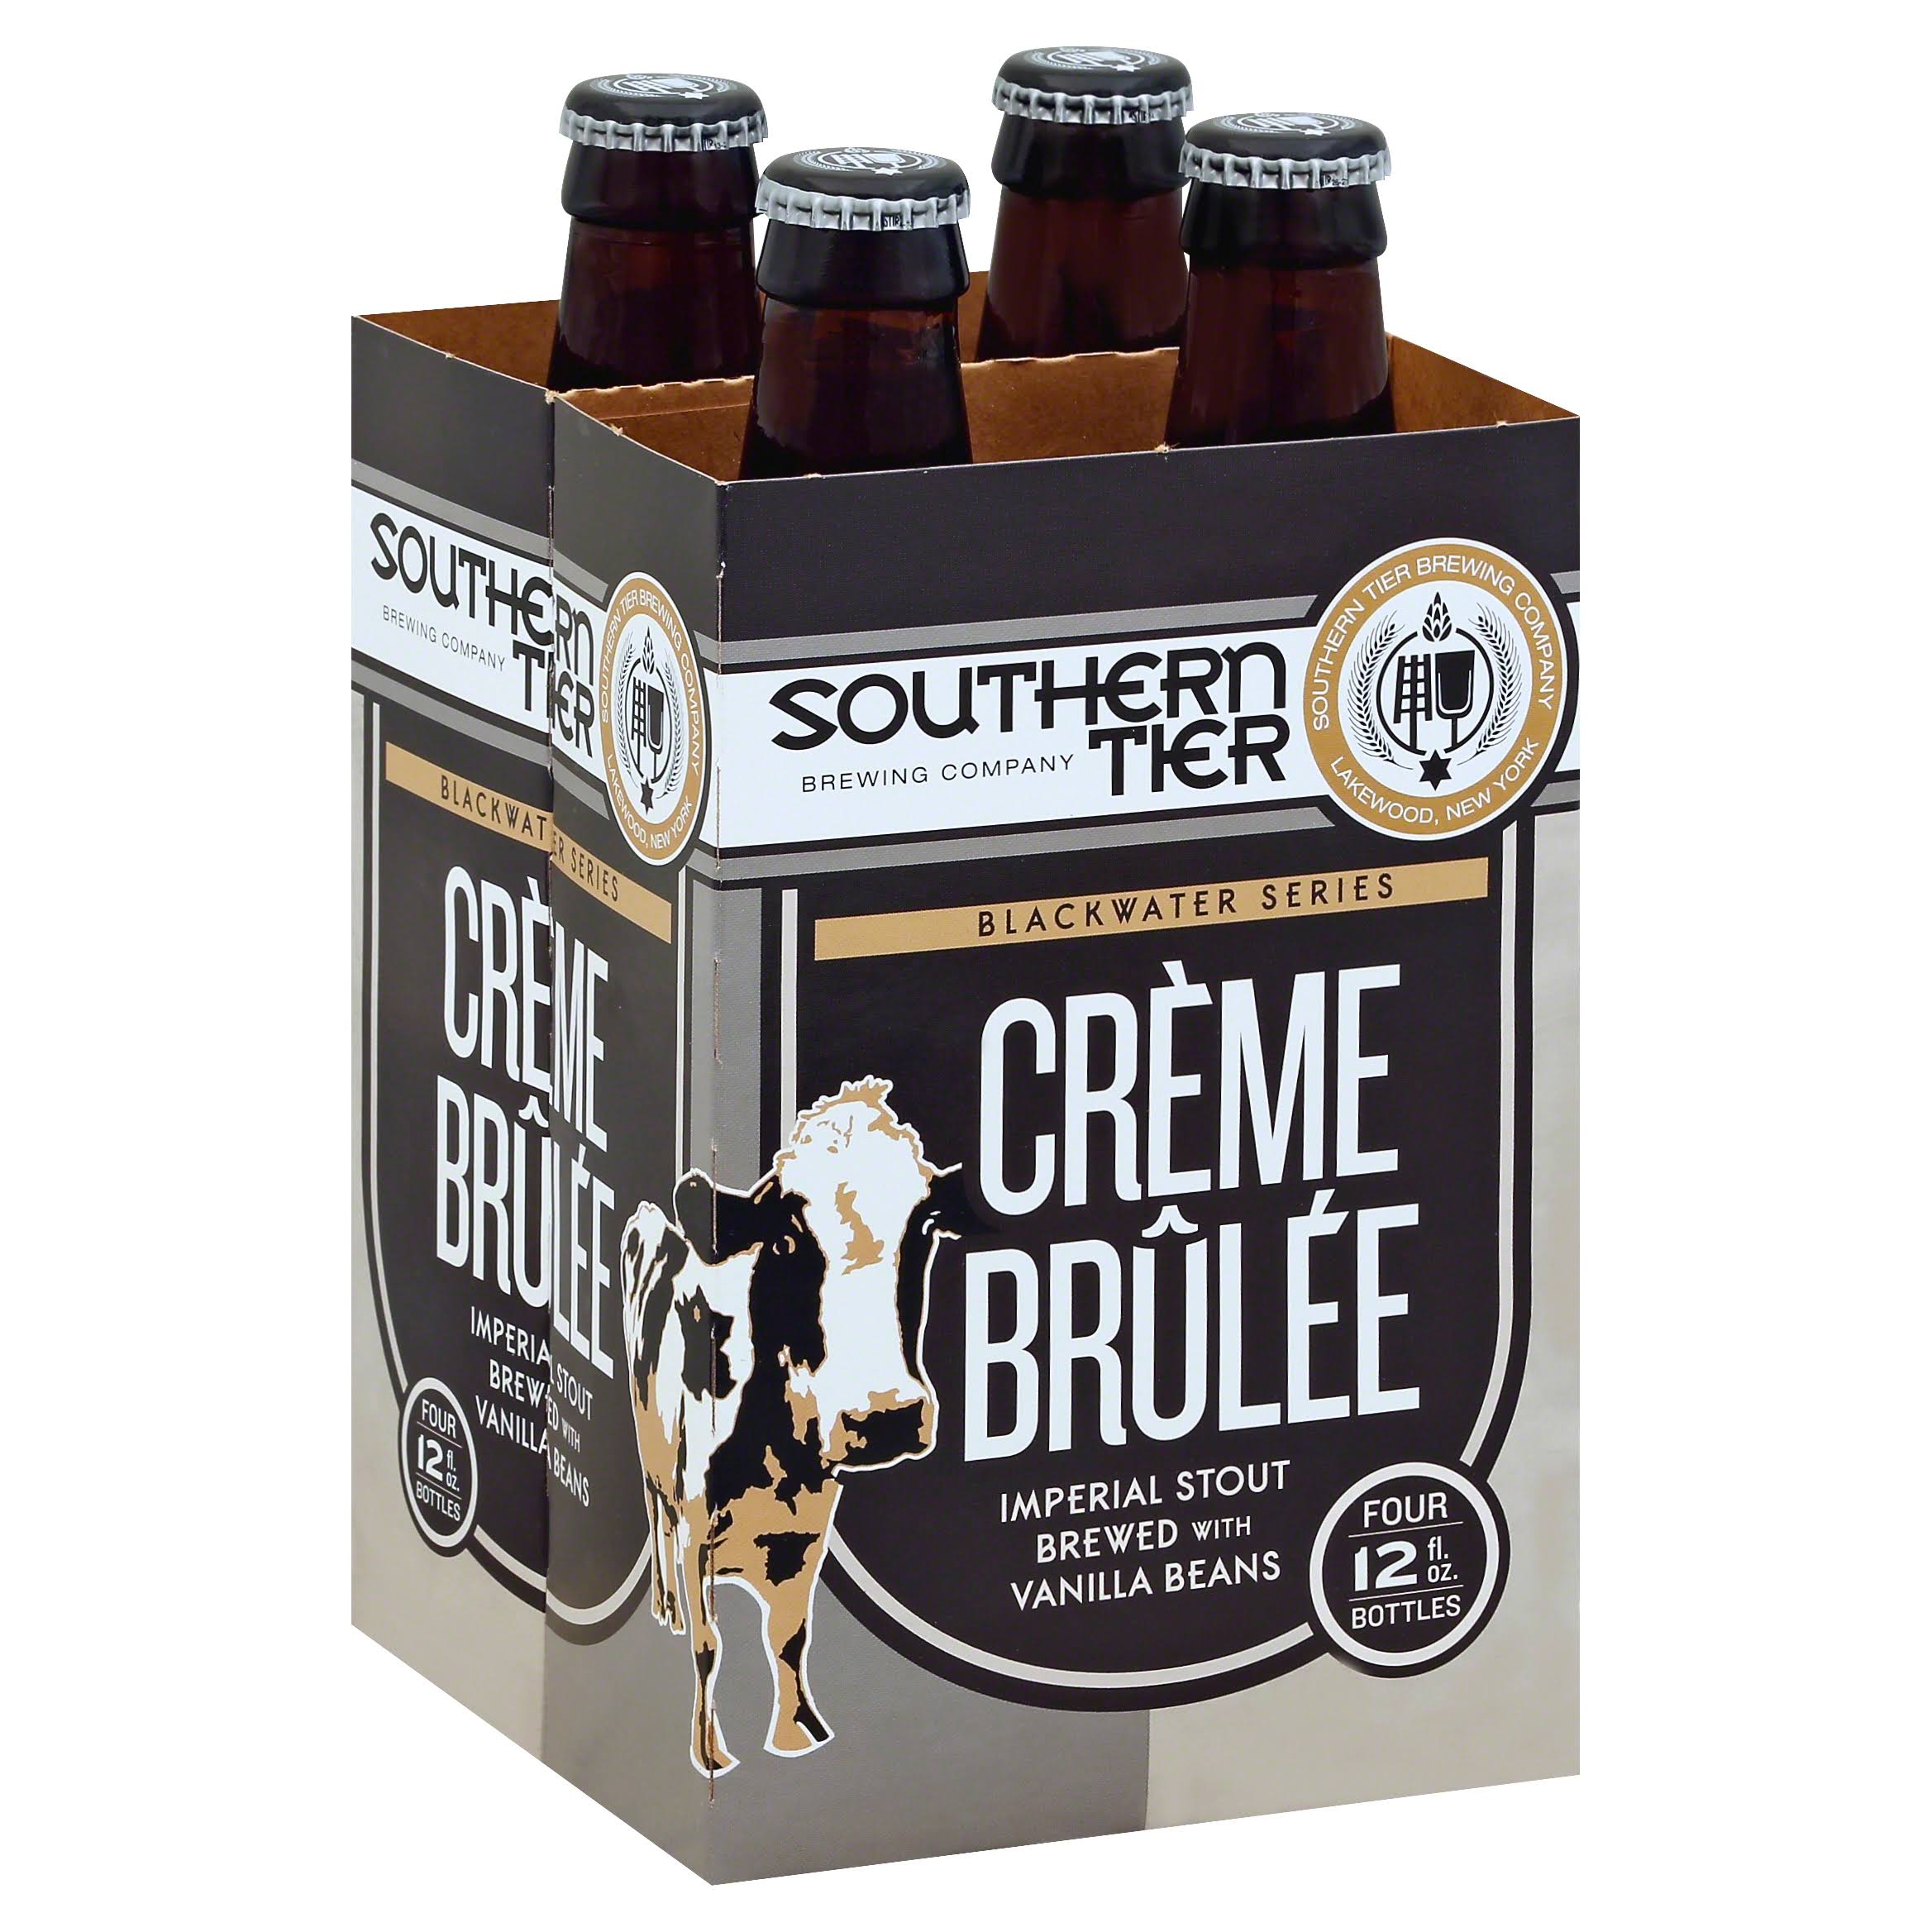 Southern Tier Blackwater Series Beer, Imperial Stout, Creme Brulee - 4 pack, 12 fl oz bottles